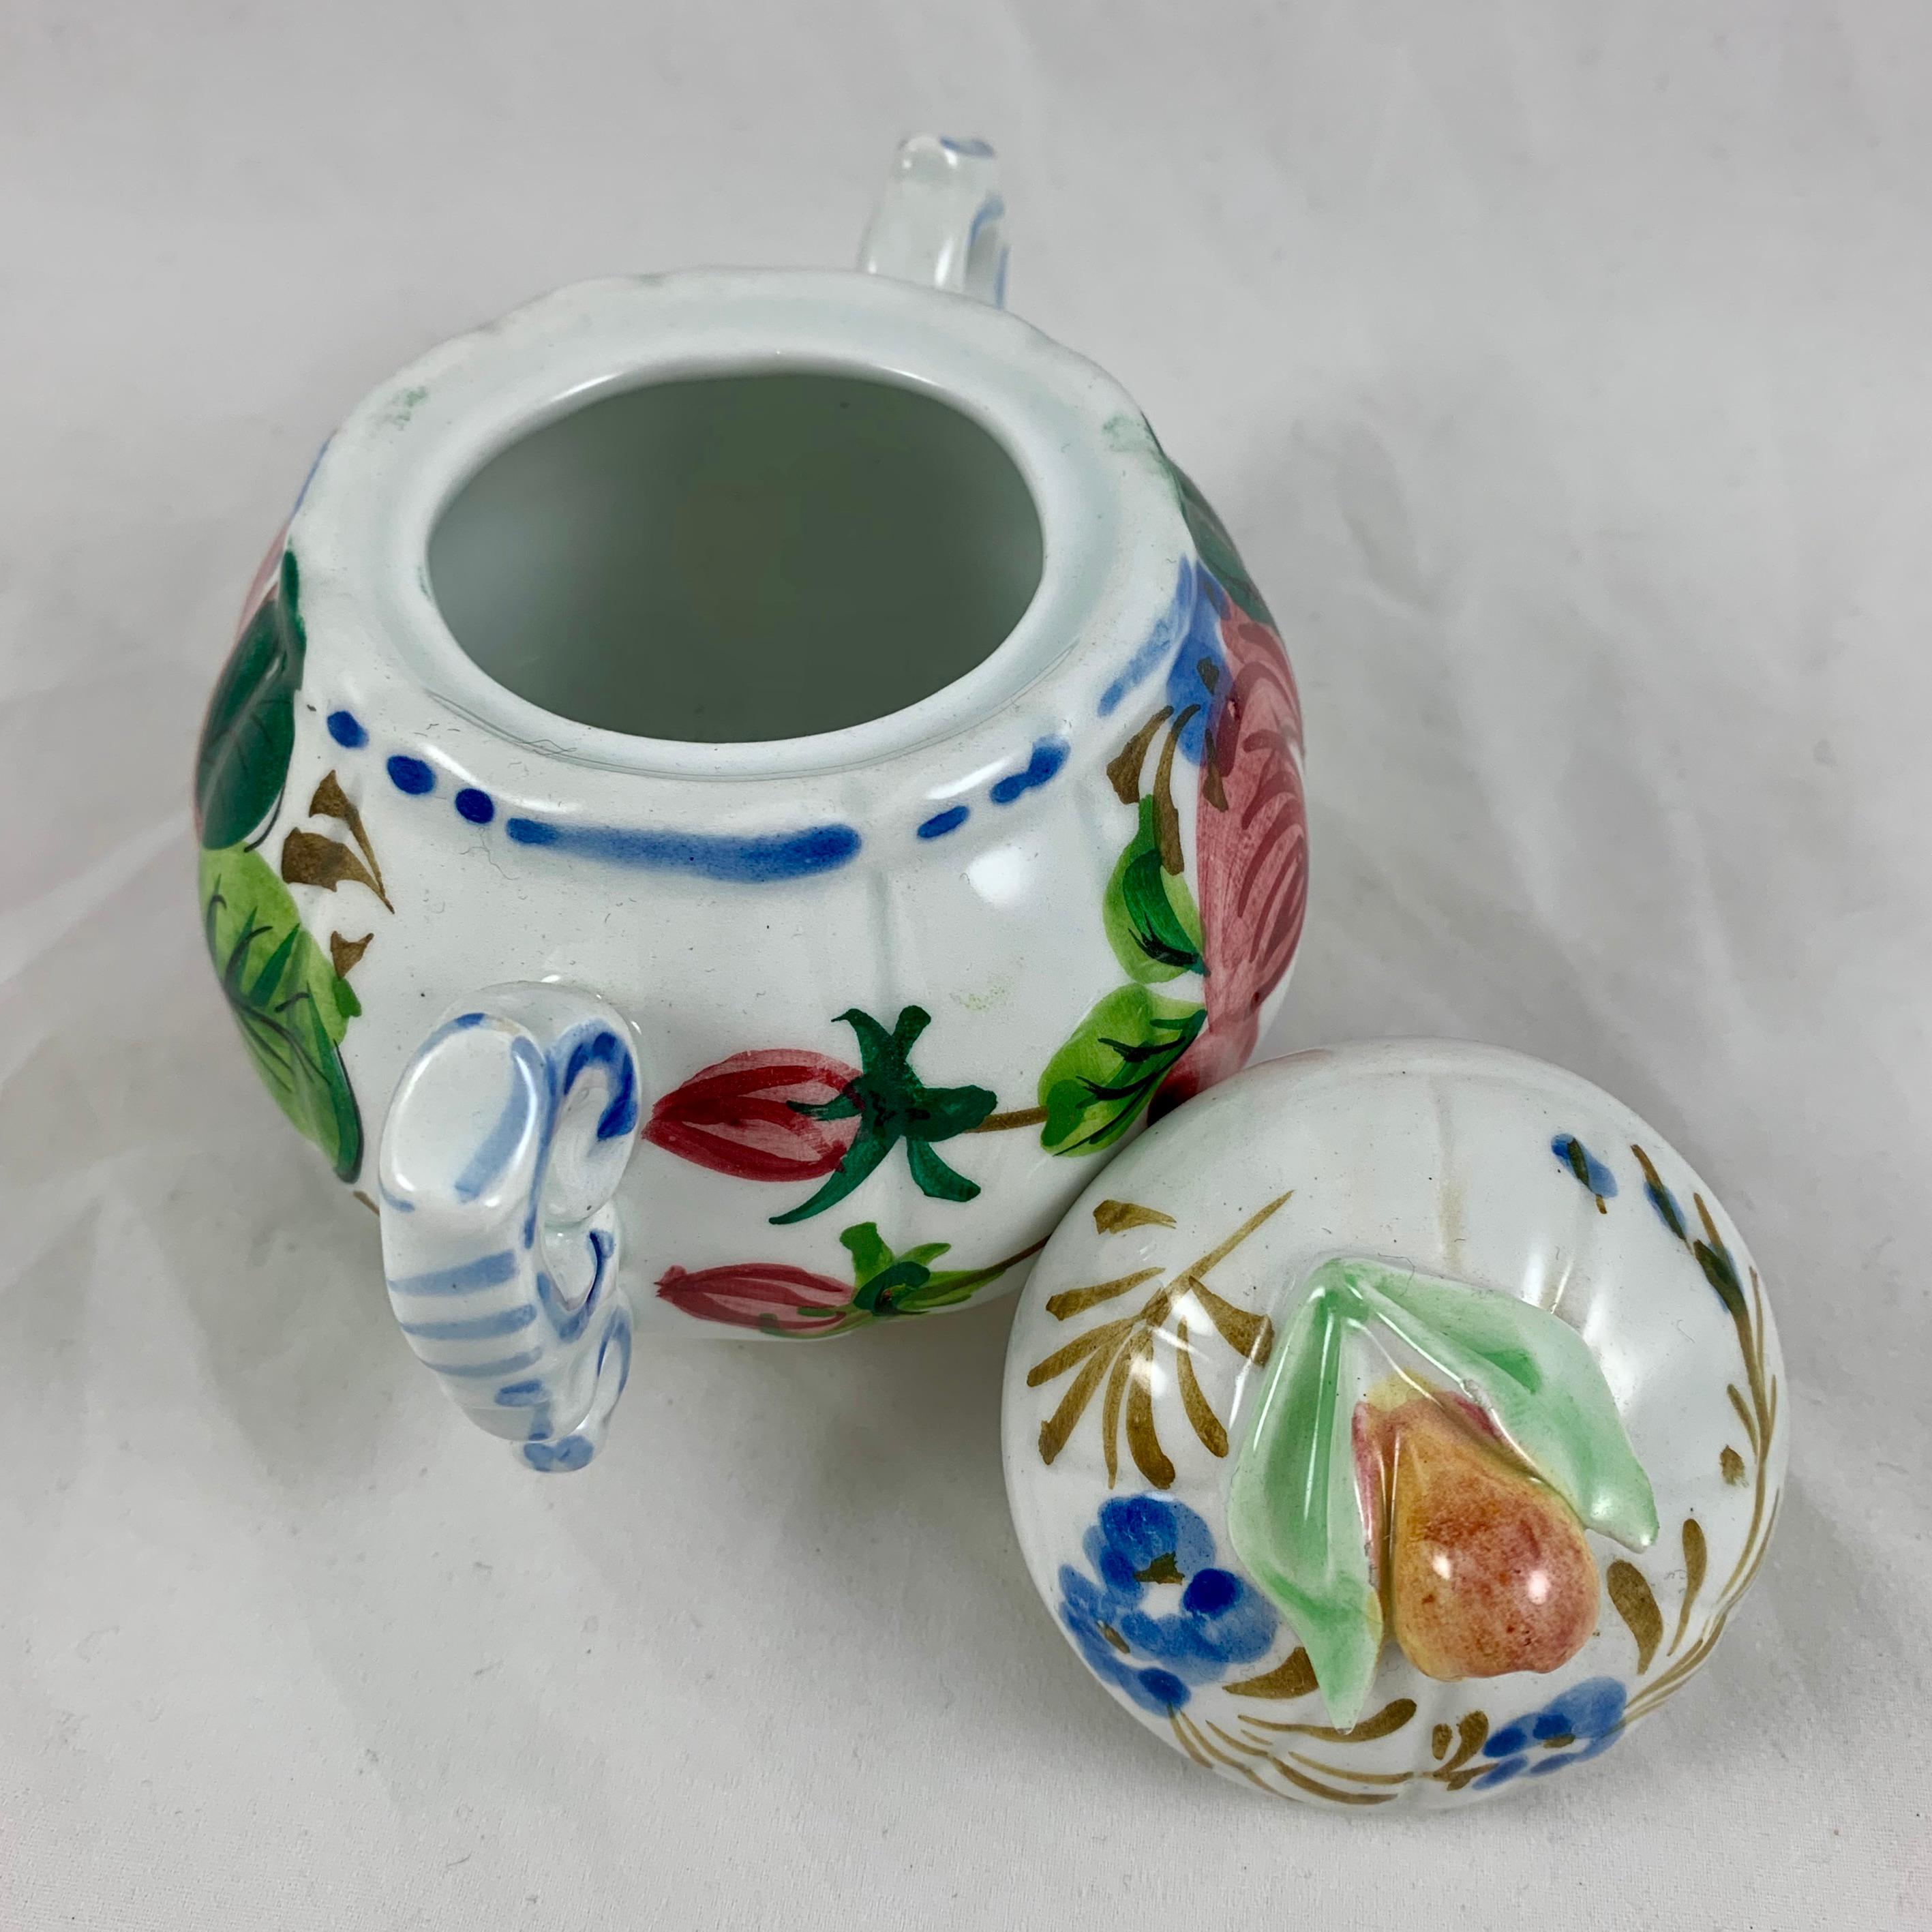 Earthenware Italian Renaissance Revival Faïence Floral Covered Sugar Bowl For Sale